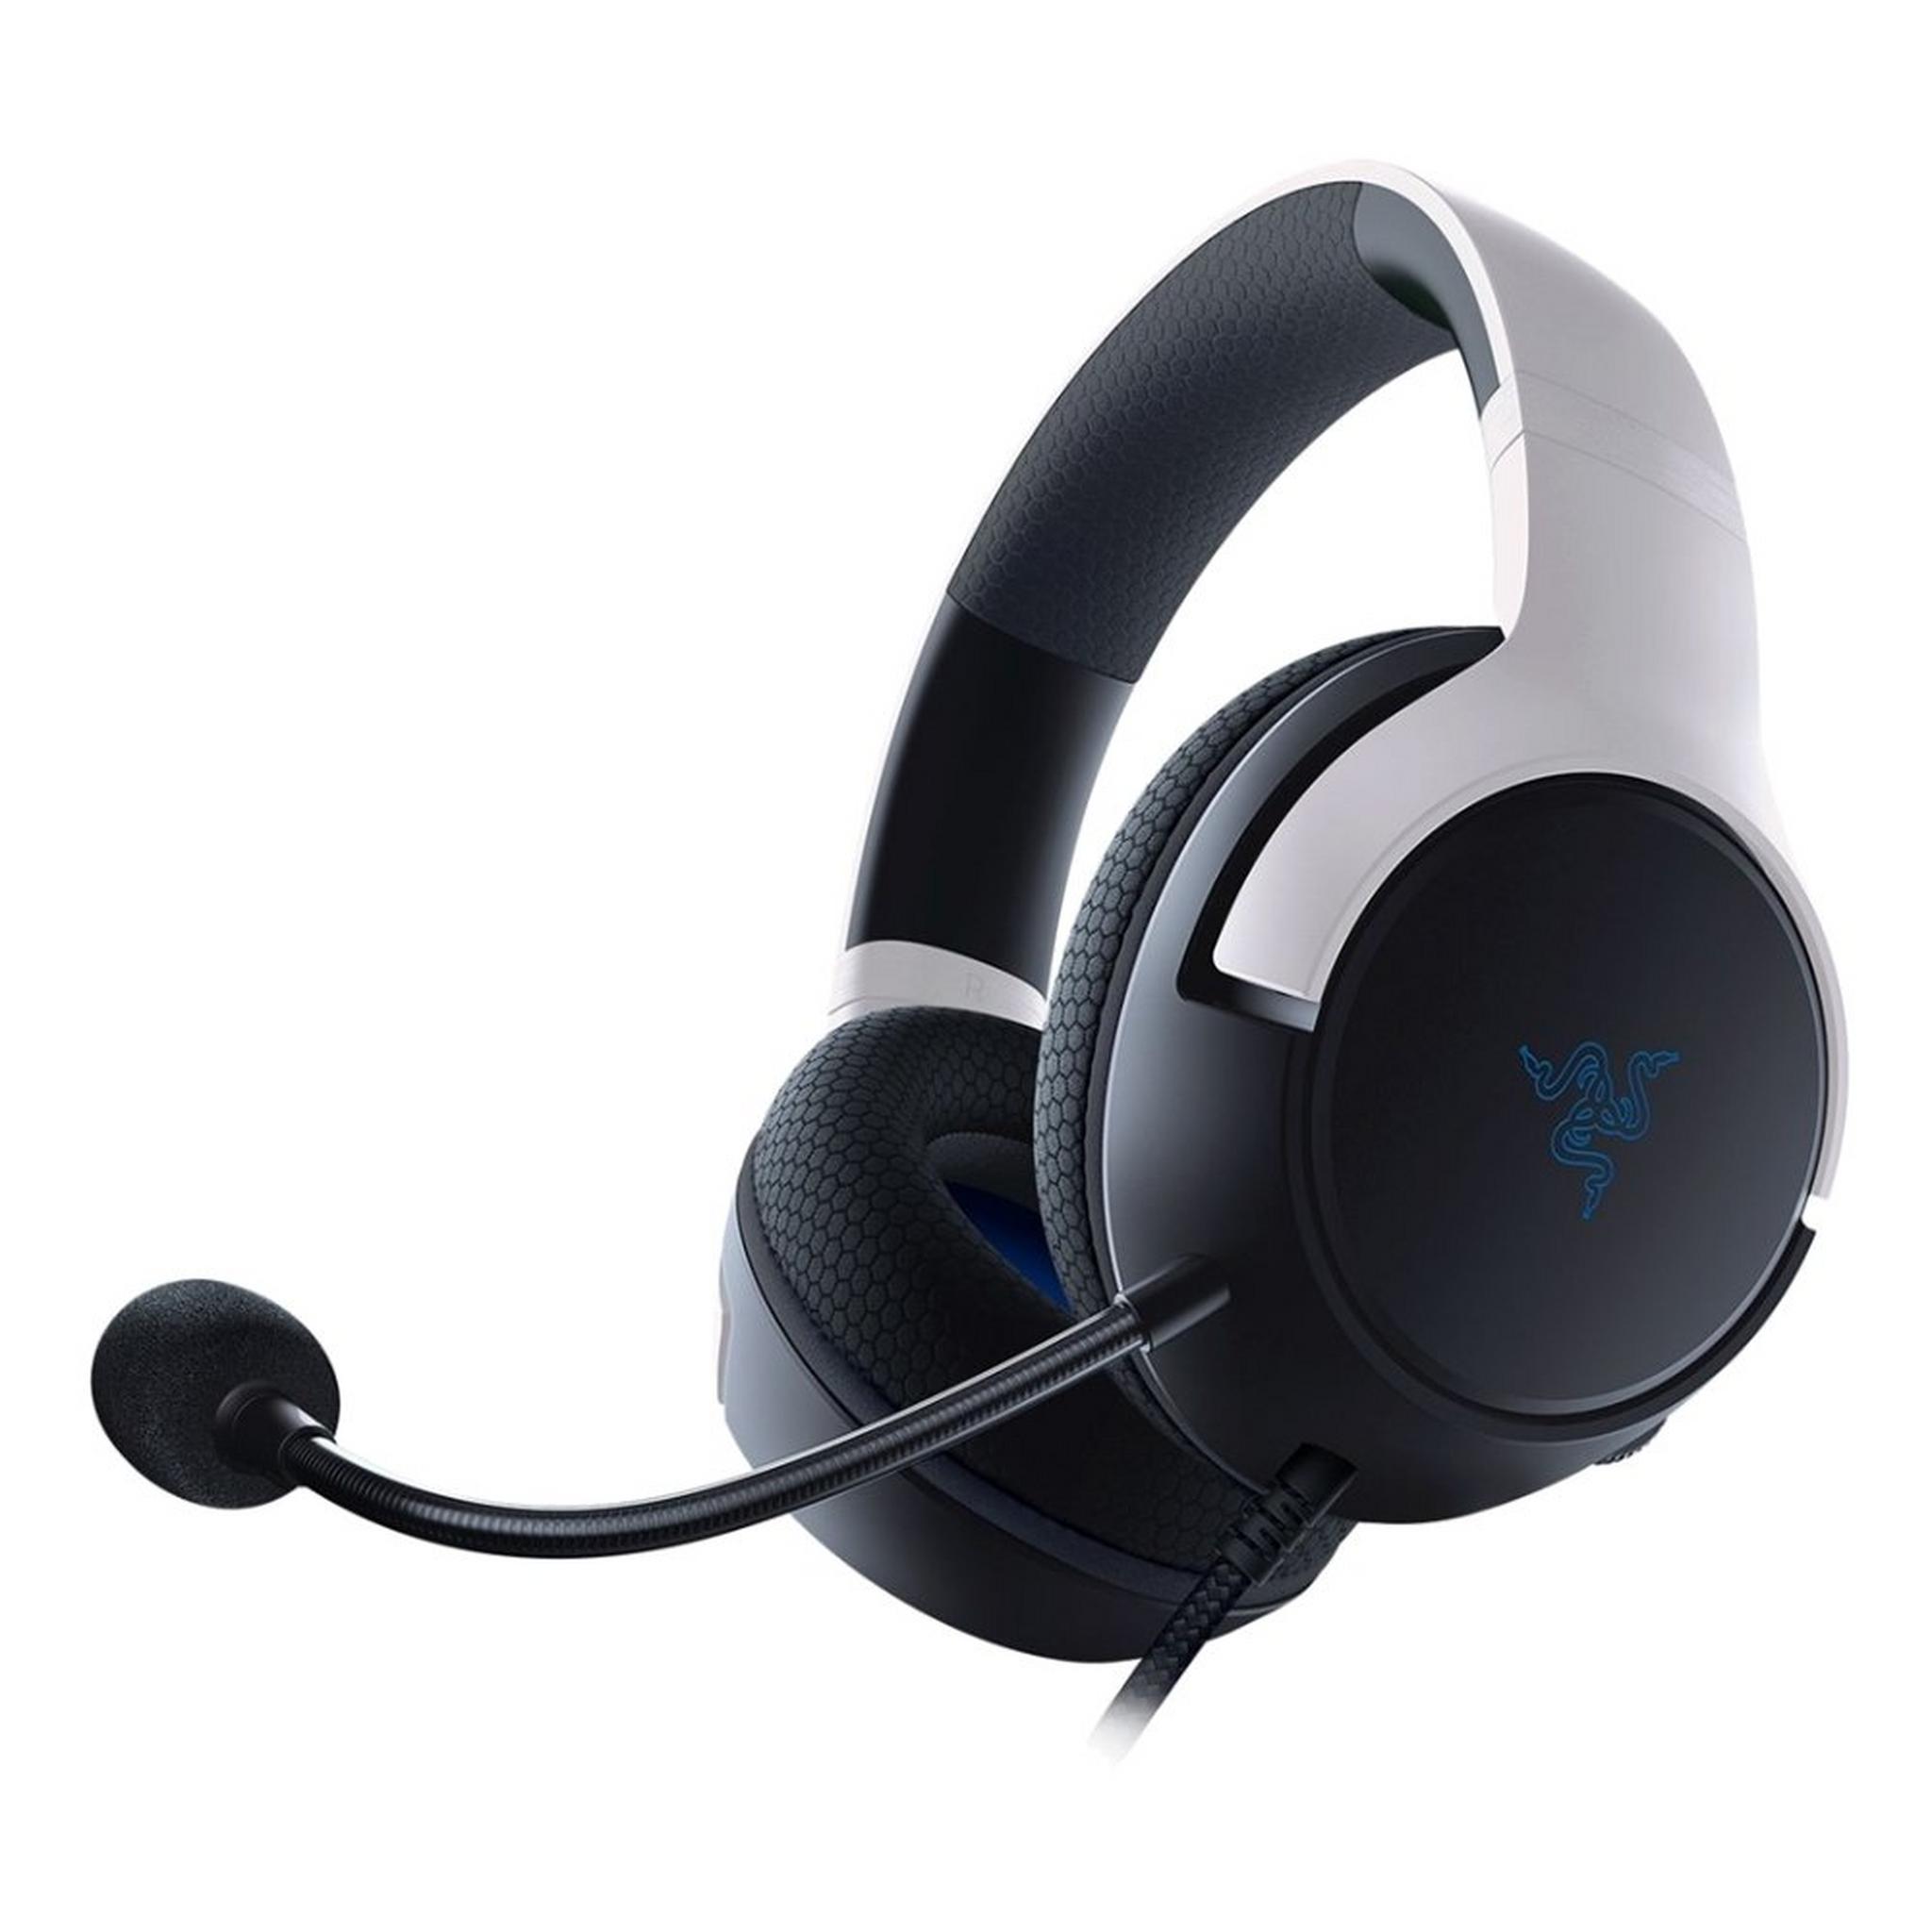 Razer Kaira X PlayStation Gaming Headset - White